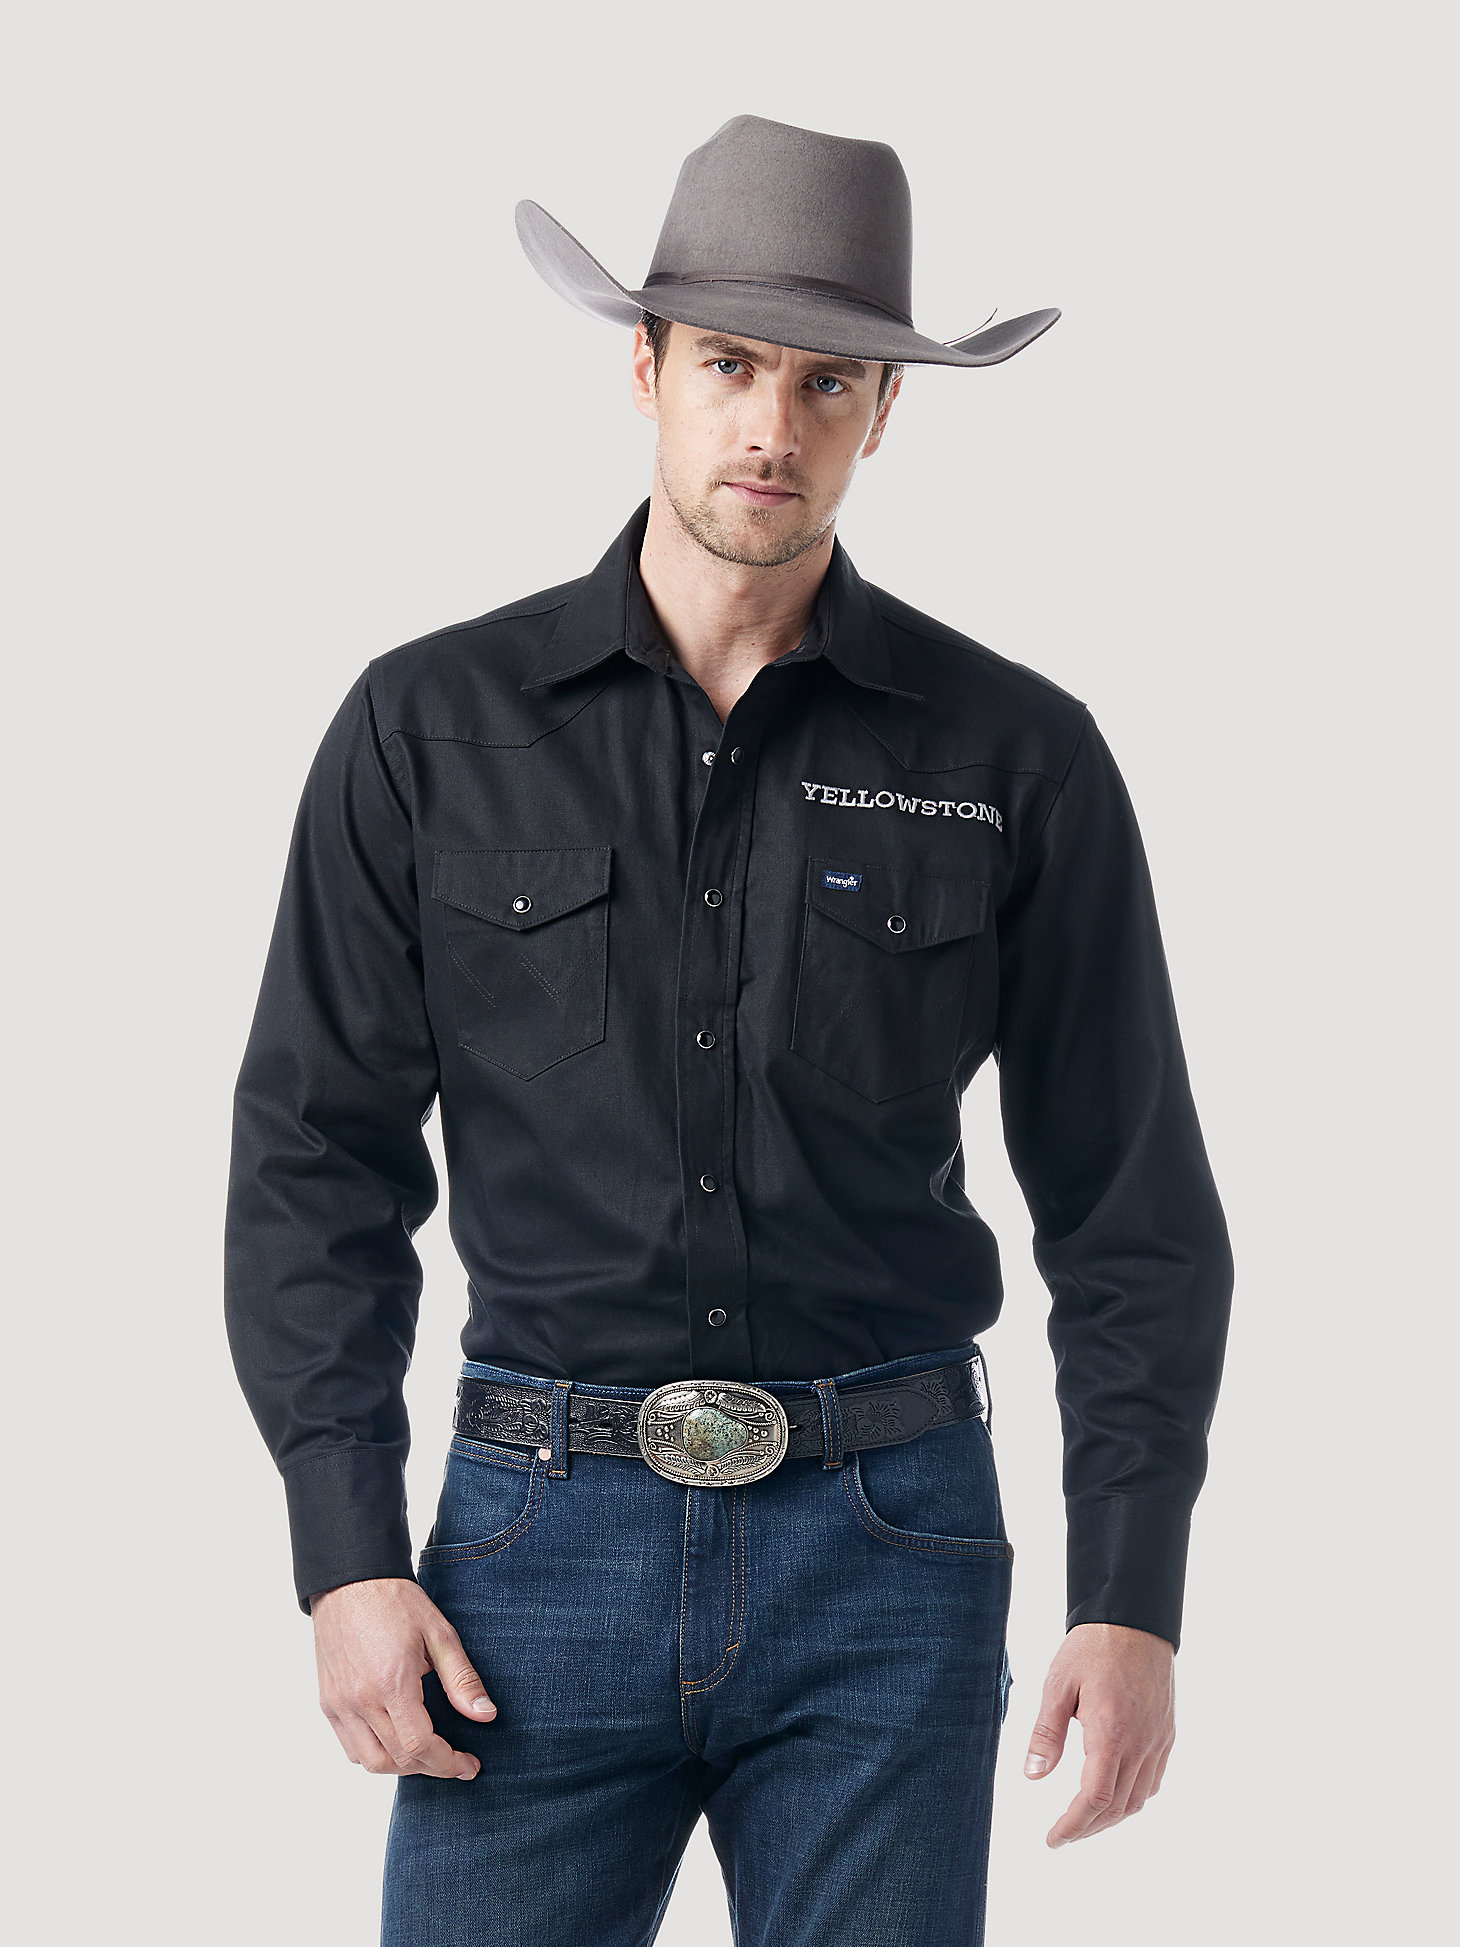 Wrangler x Yellowstone Desertscape Twill Snap Shirt in Black main view